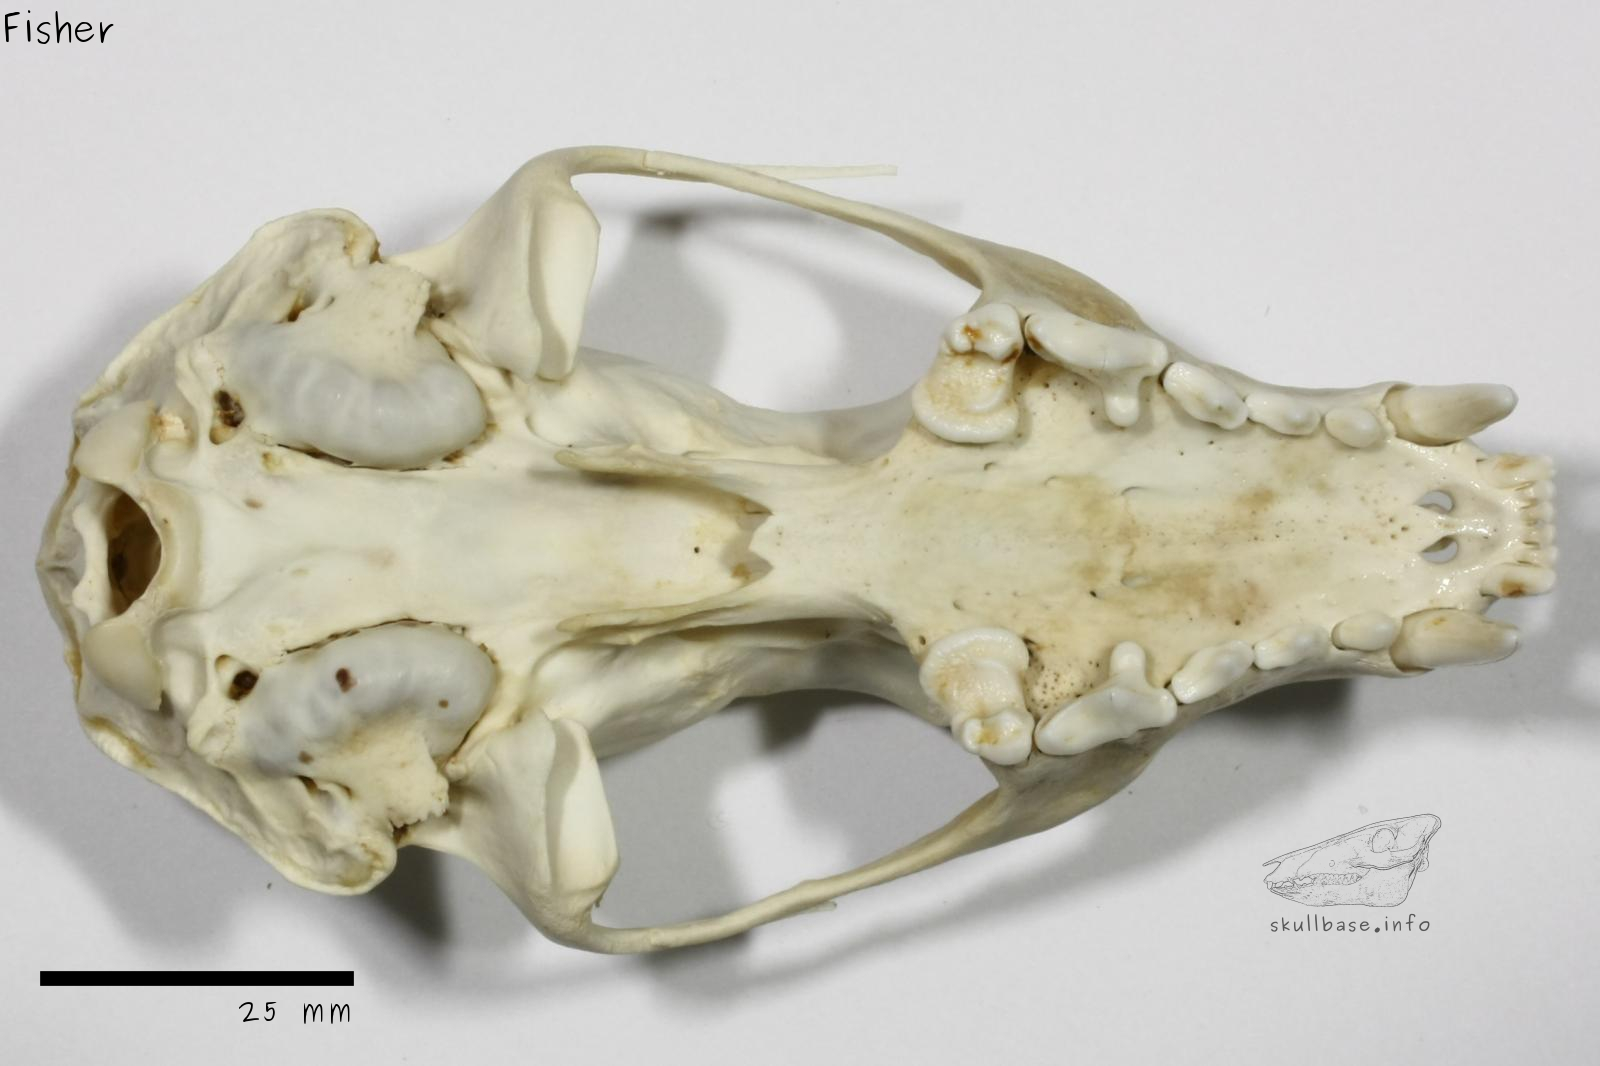 Fisher (Pekania pennanti) skull ventral view